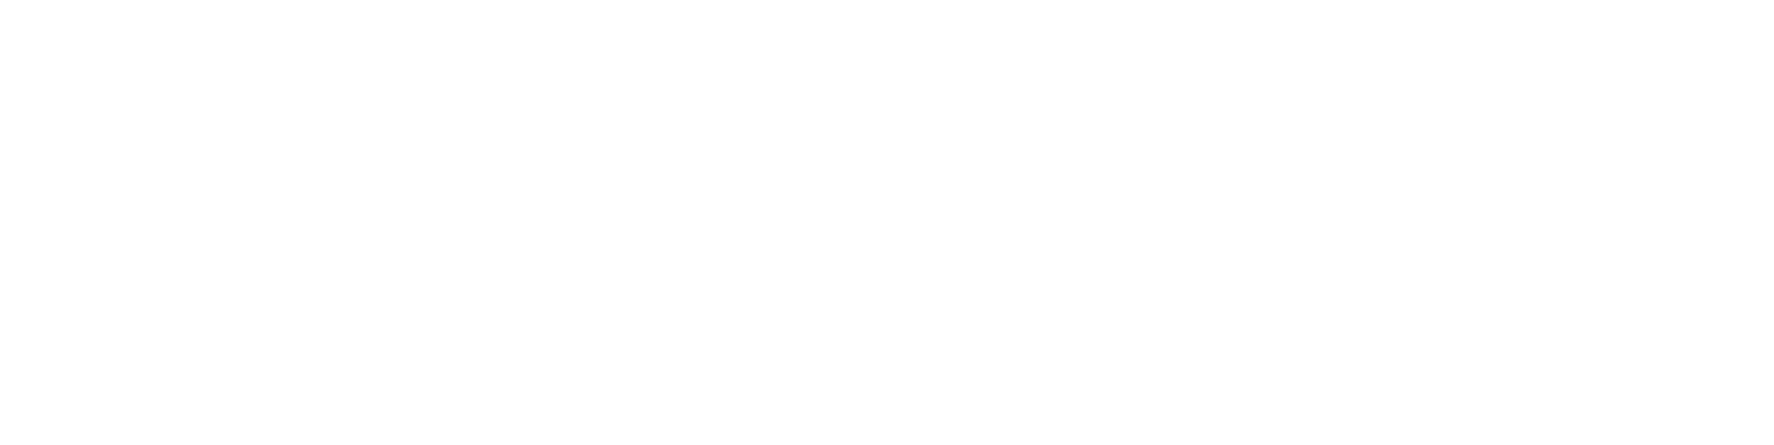 Nano-X Imaging logo large for dark backgrounds (transparent PNG)